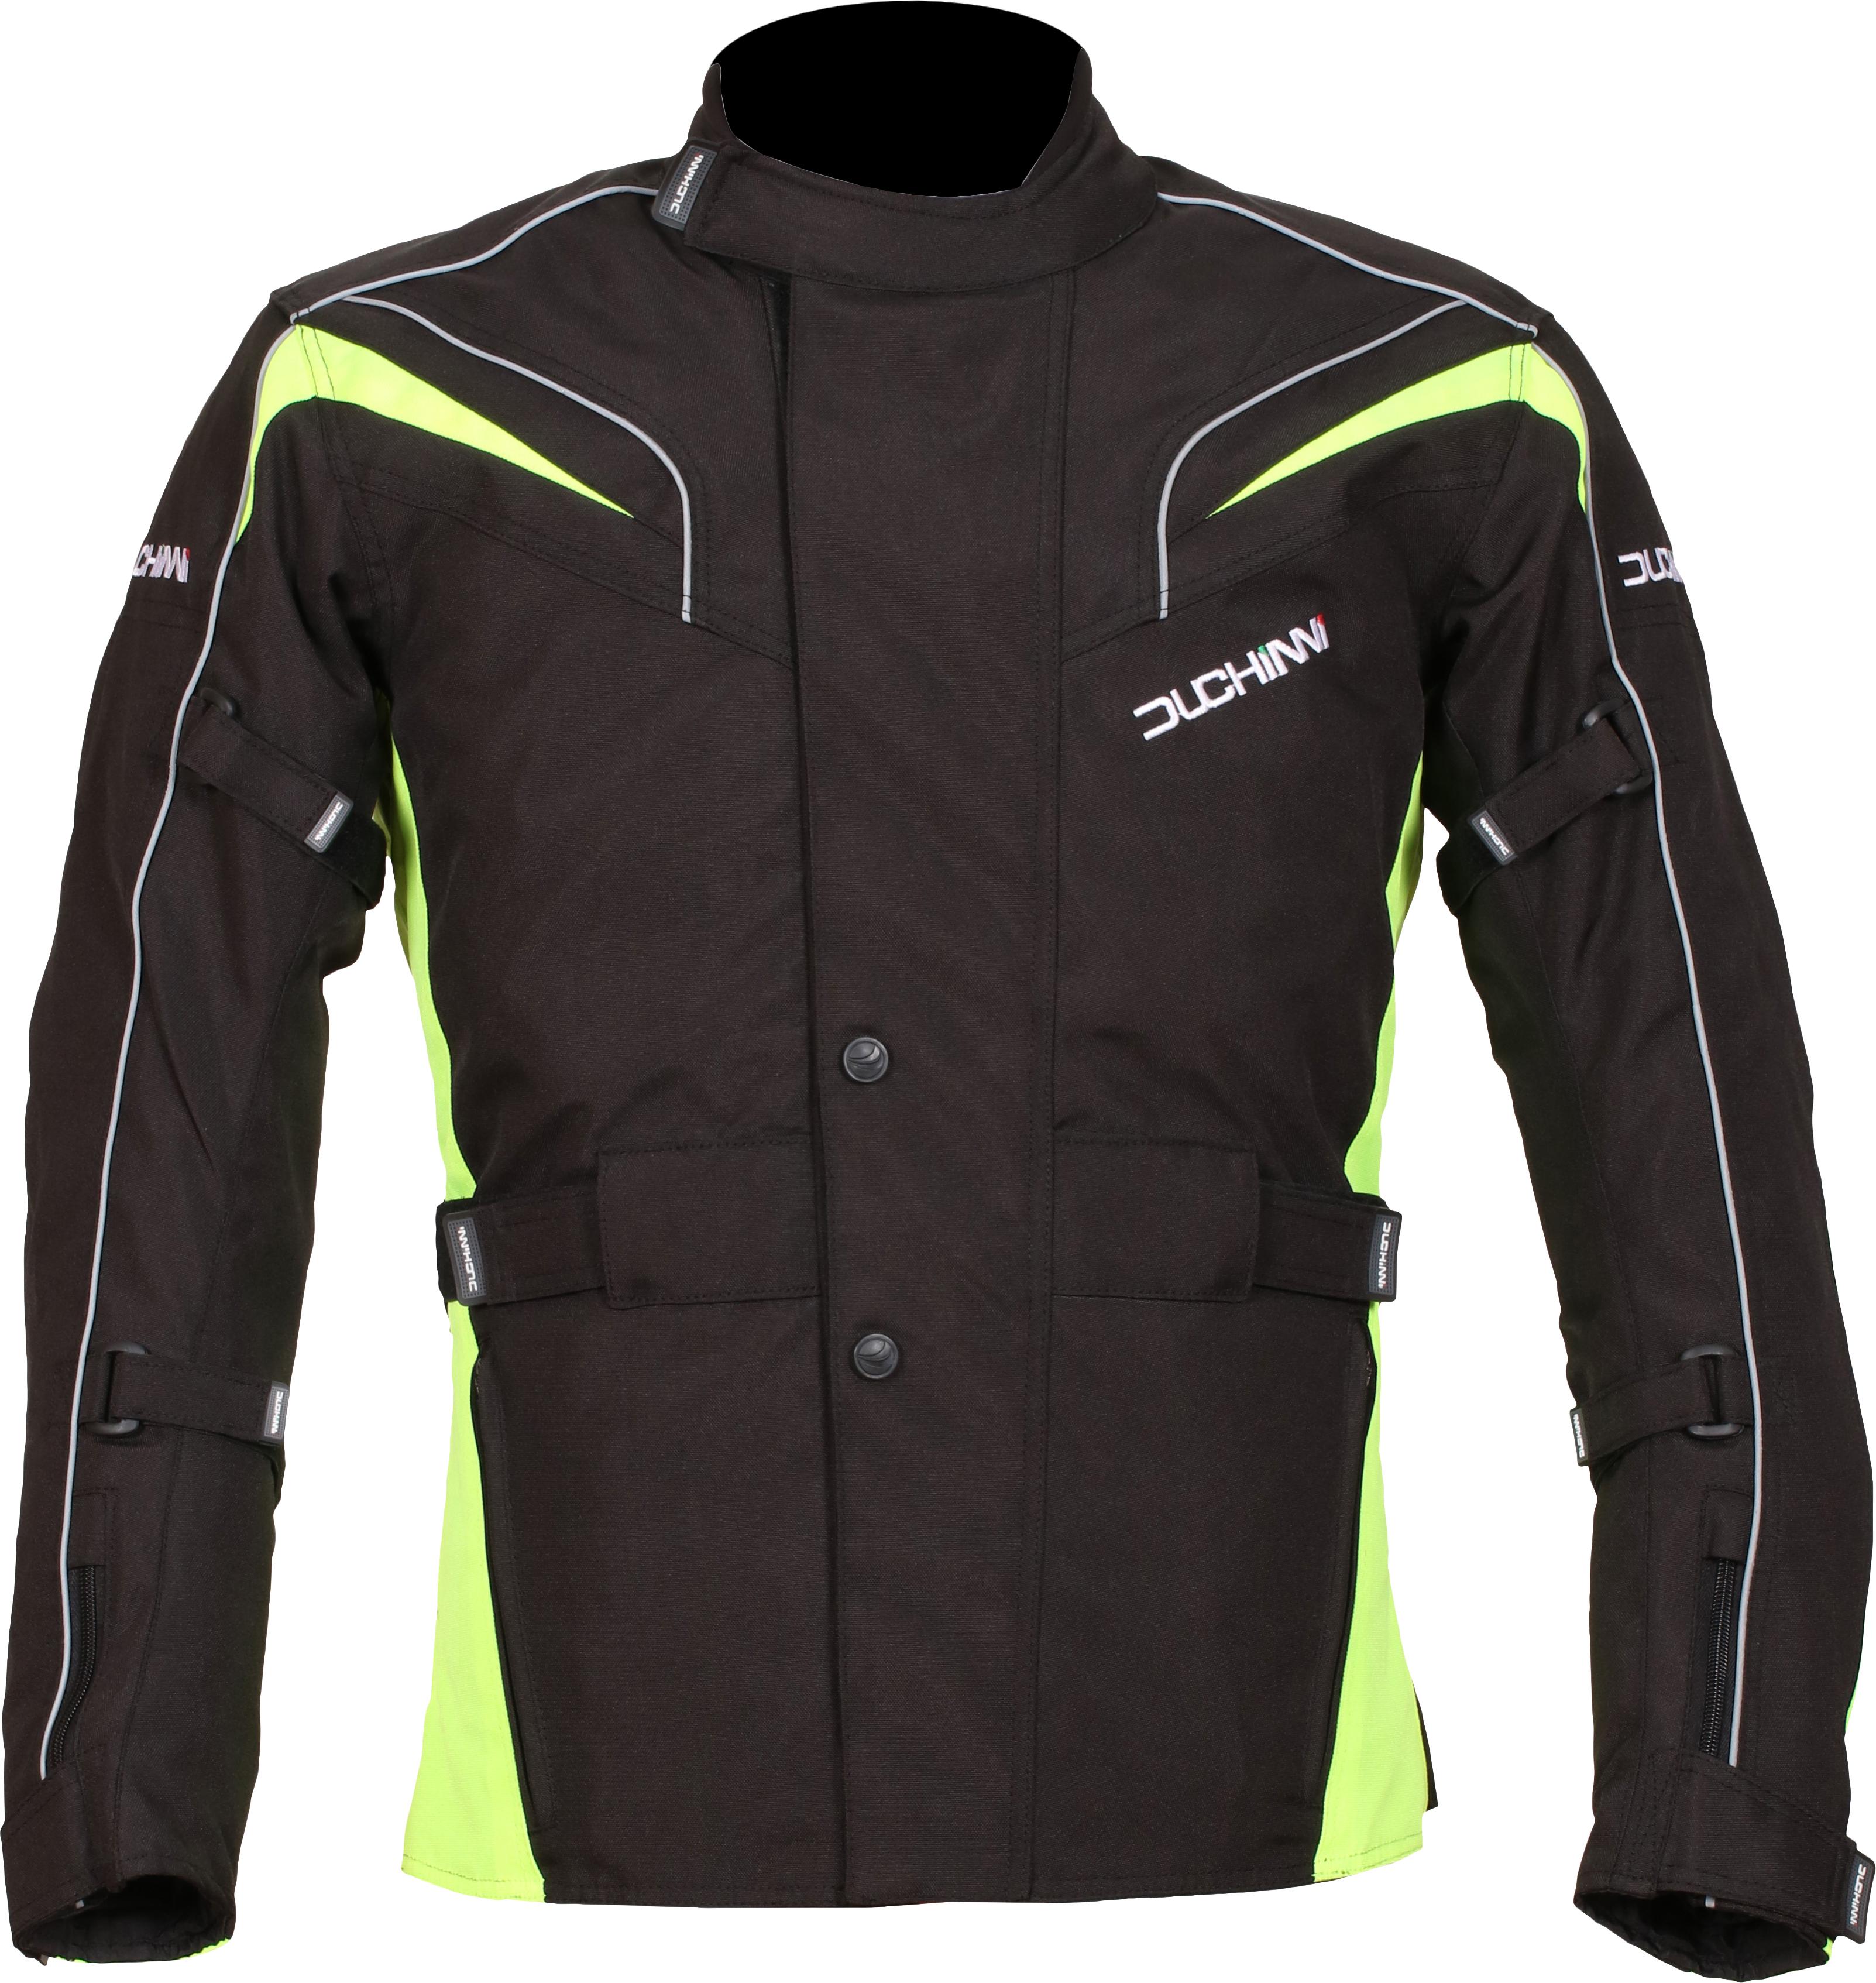 Duchinni Hurricane Motorcycle Jacket - Black And Neon, Xl